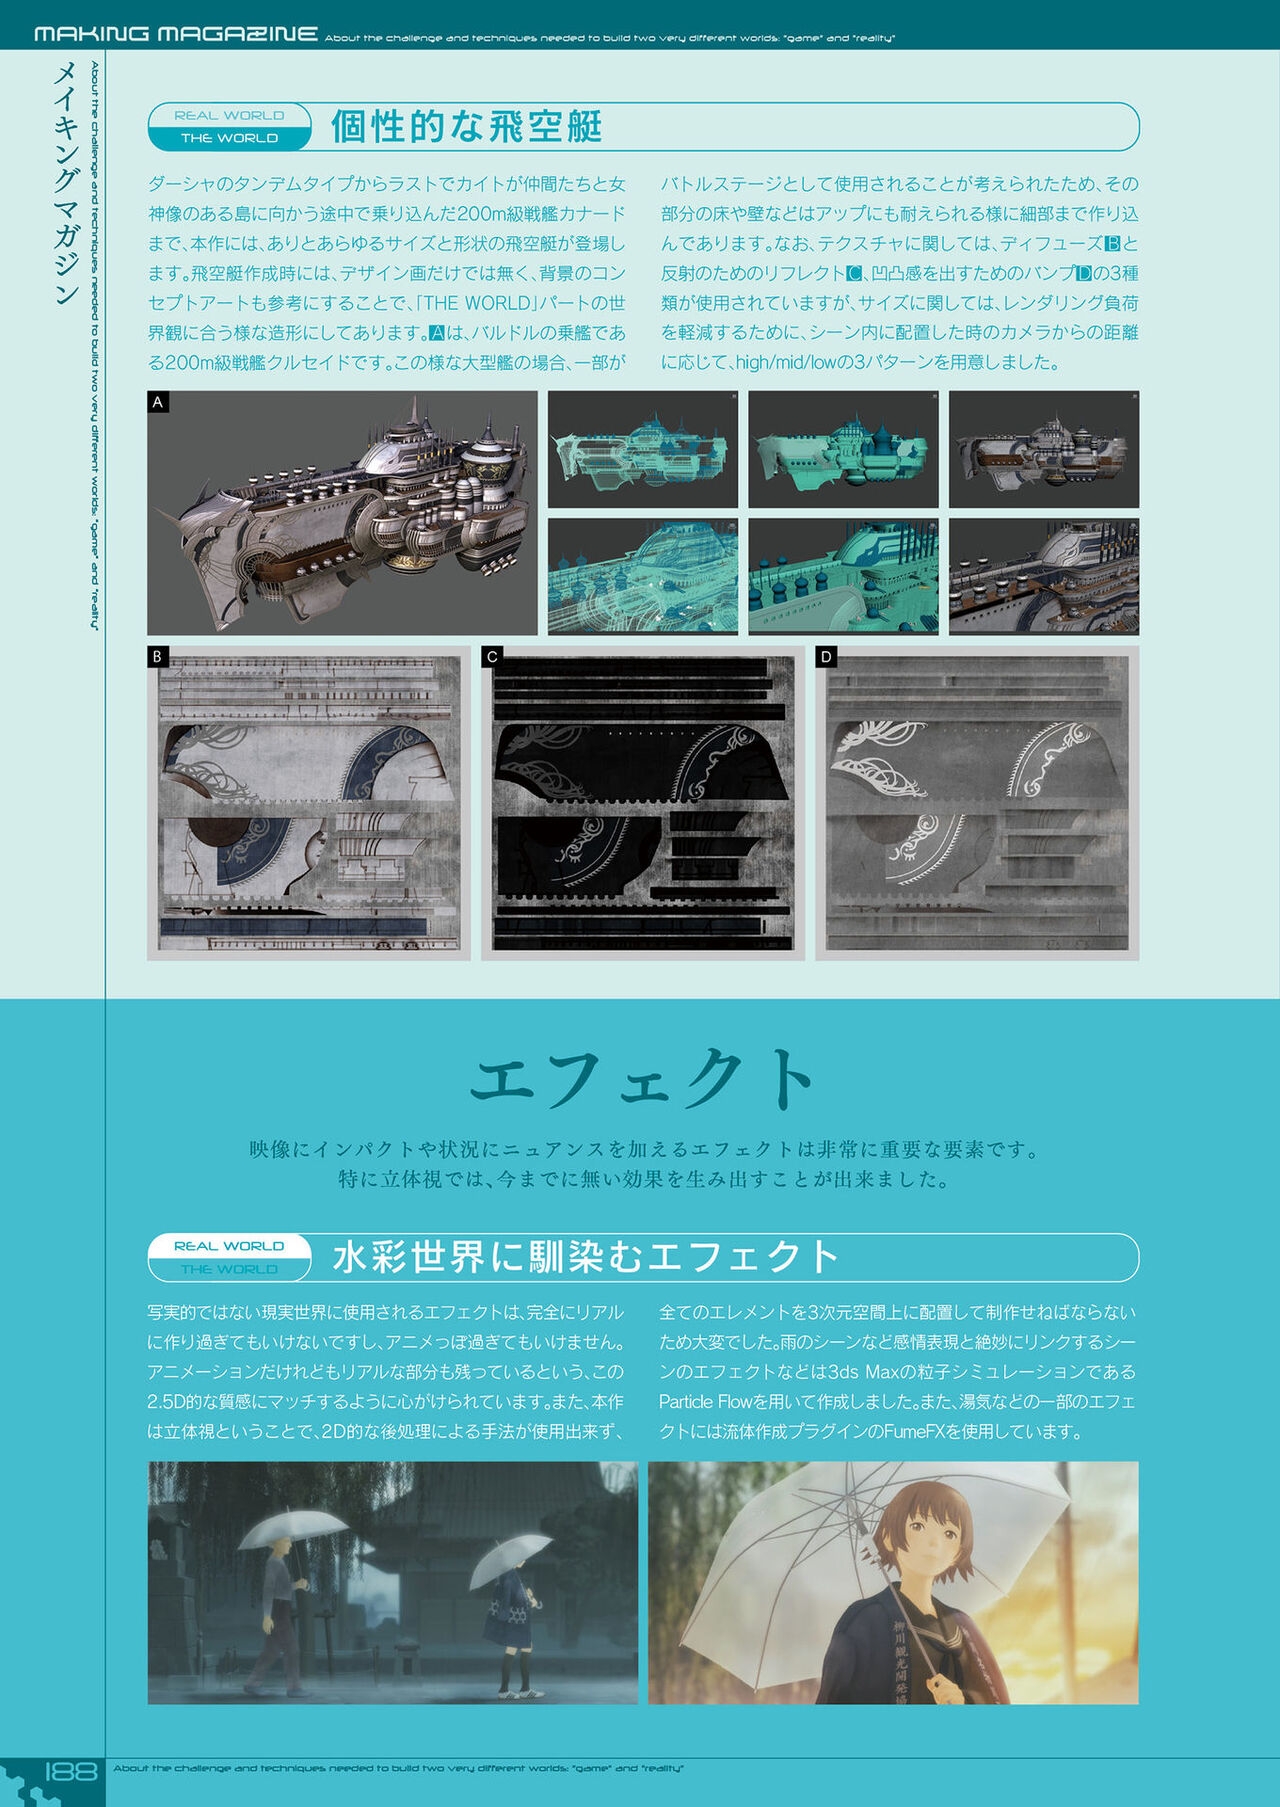 Dot Hack Sekai-no Muko ni  +Versus Complete Set  Documentation .hack //Archives _ 05 190